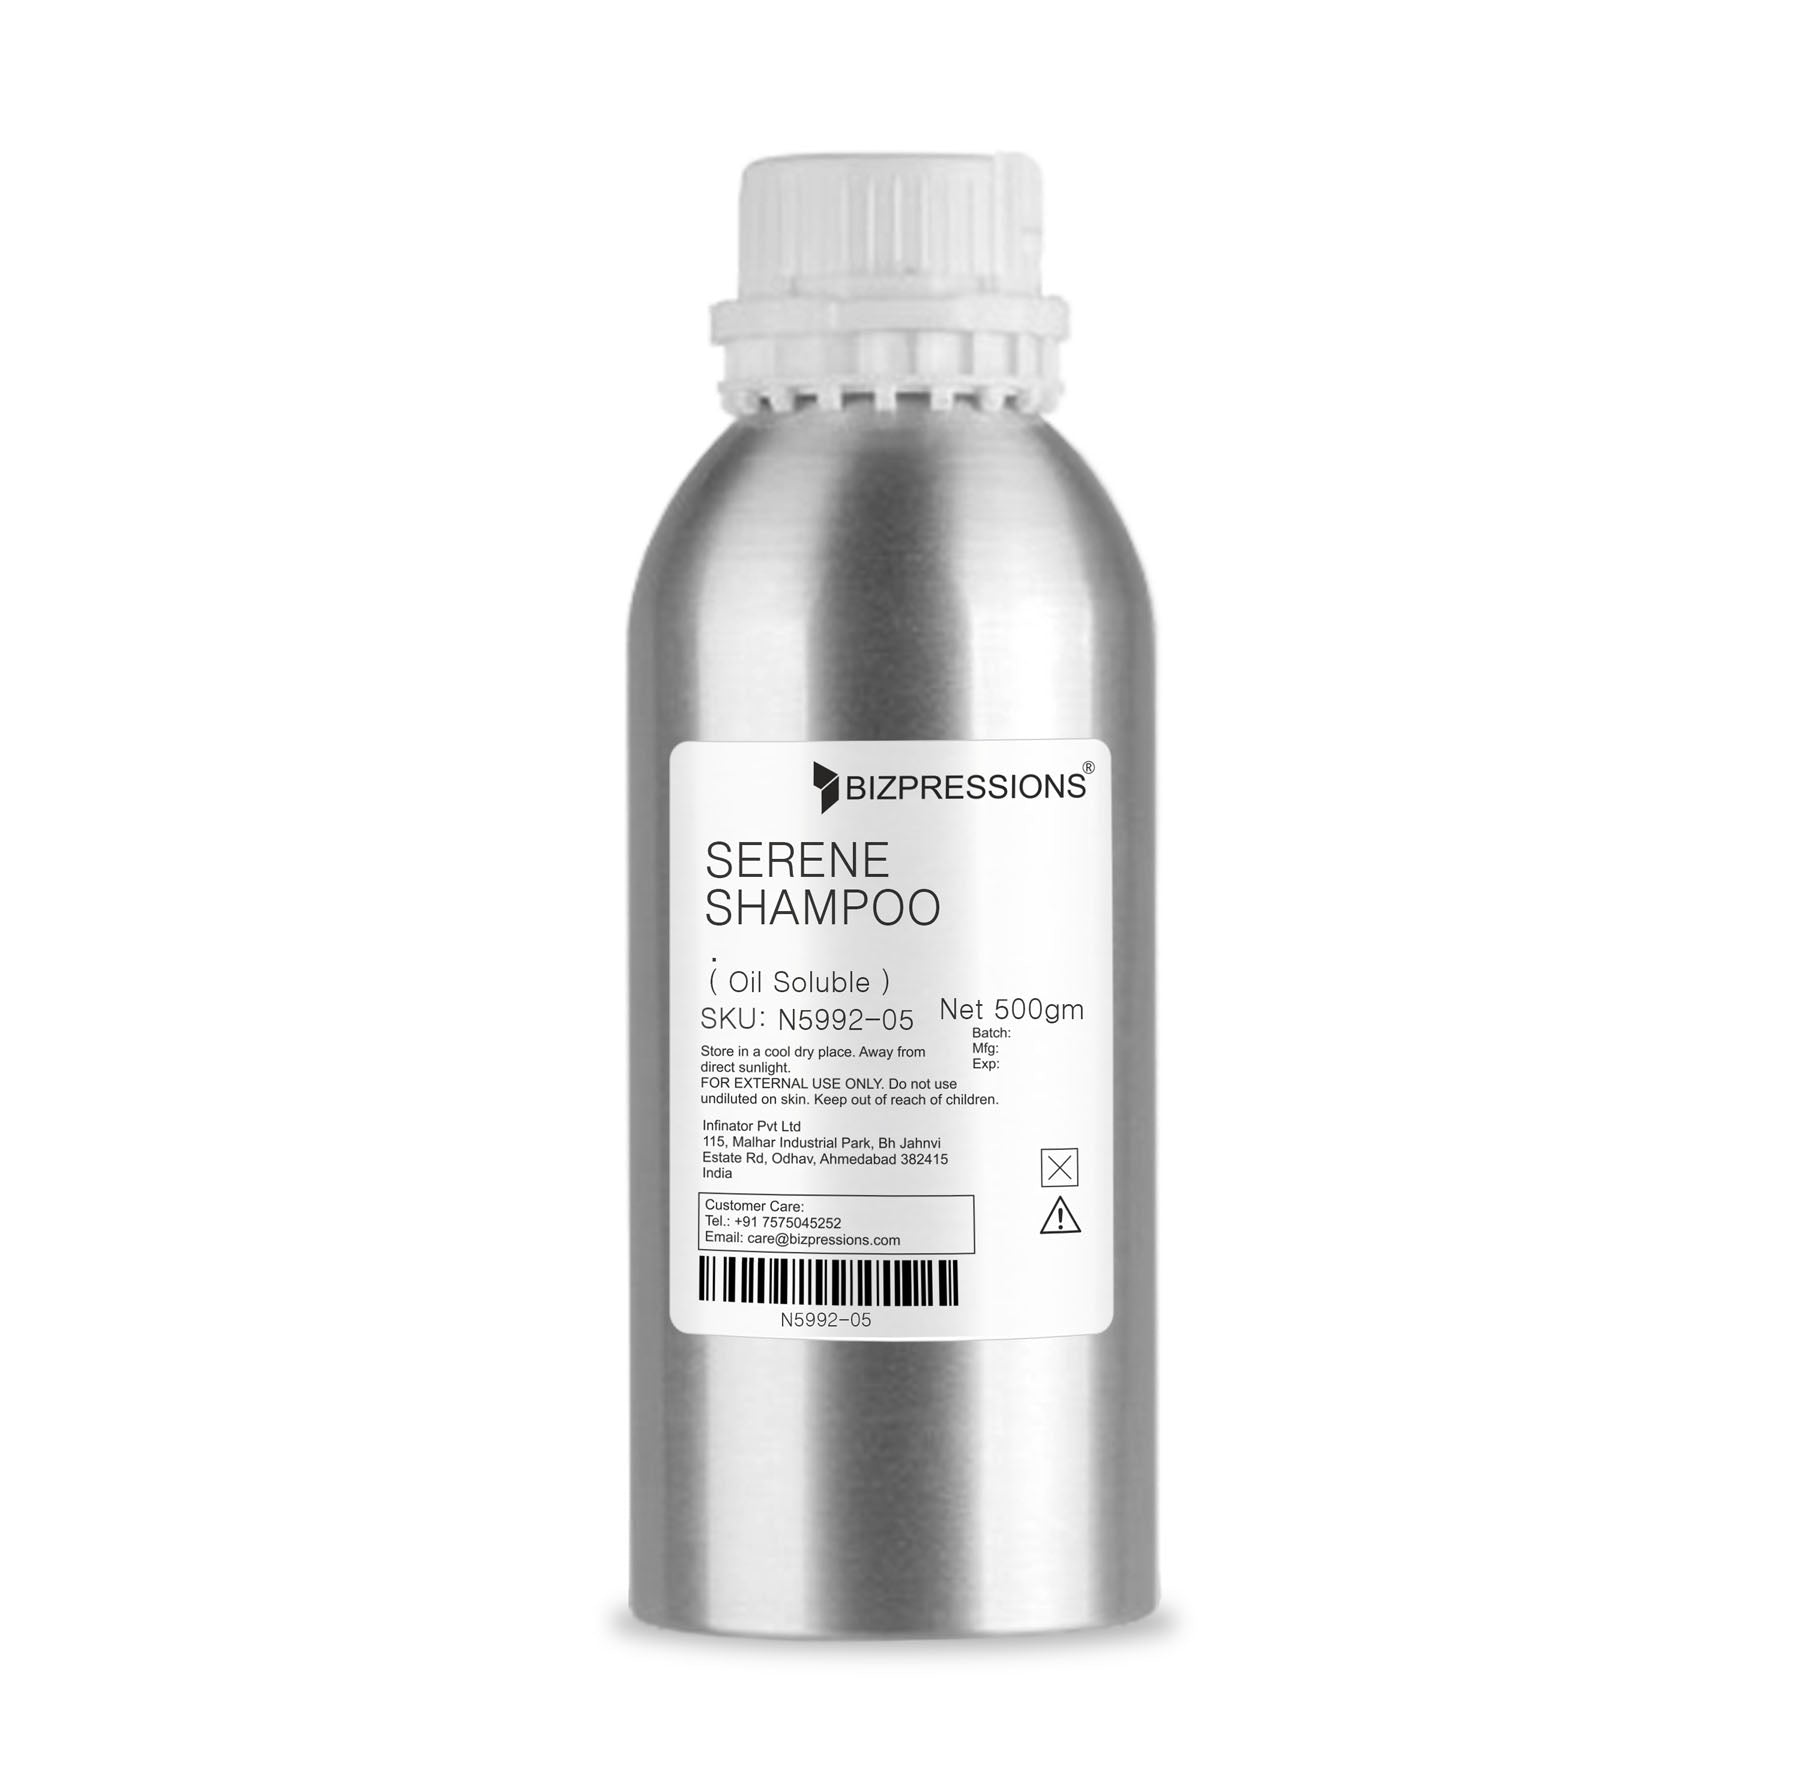 SERENE SHAMPOO - Fragrance ( Oil Soluble ) - 500 gm